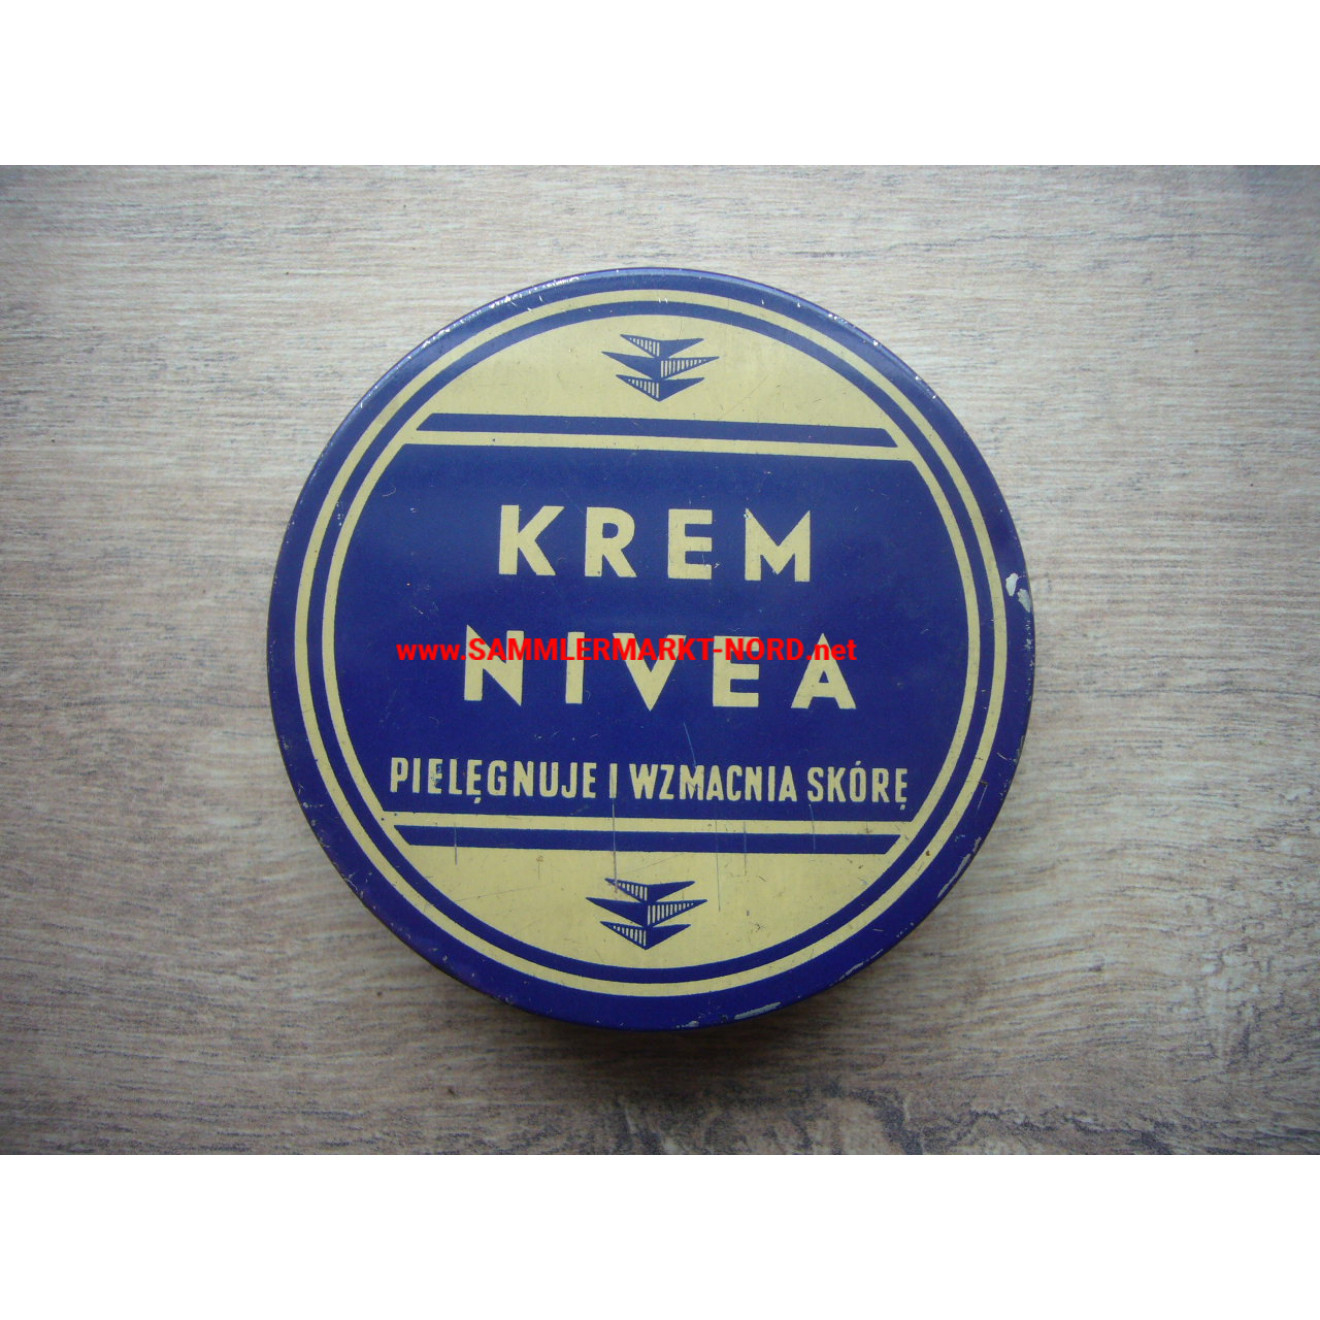 Wehrmacht Marketender - KREM NIVEA (Polen) - Blechdose